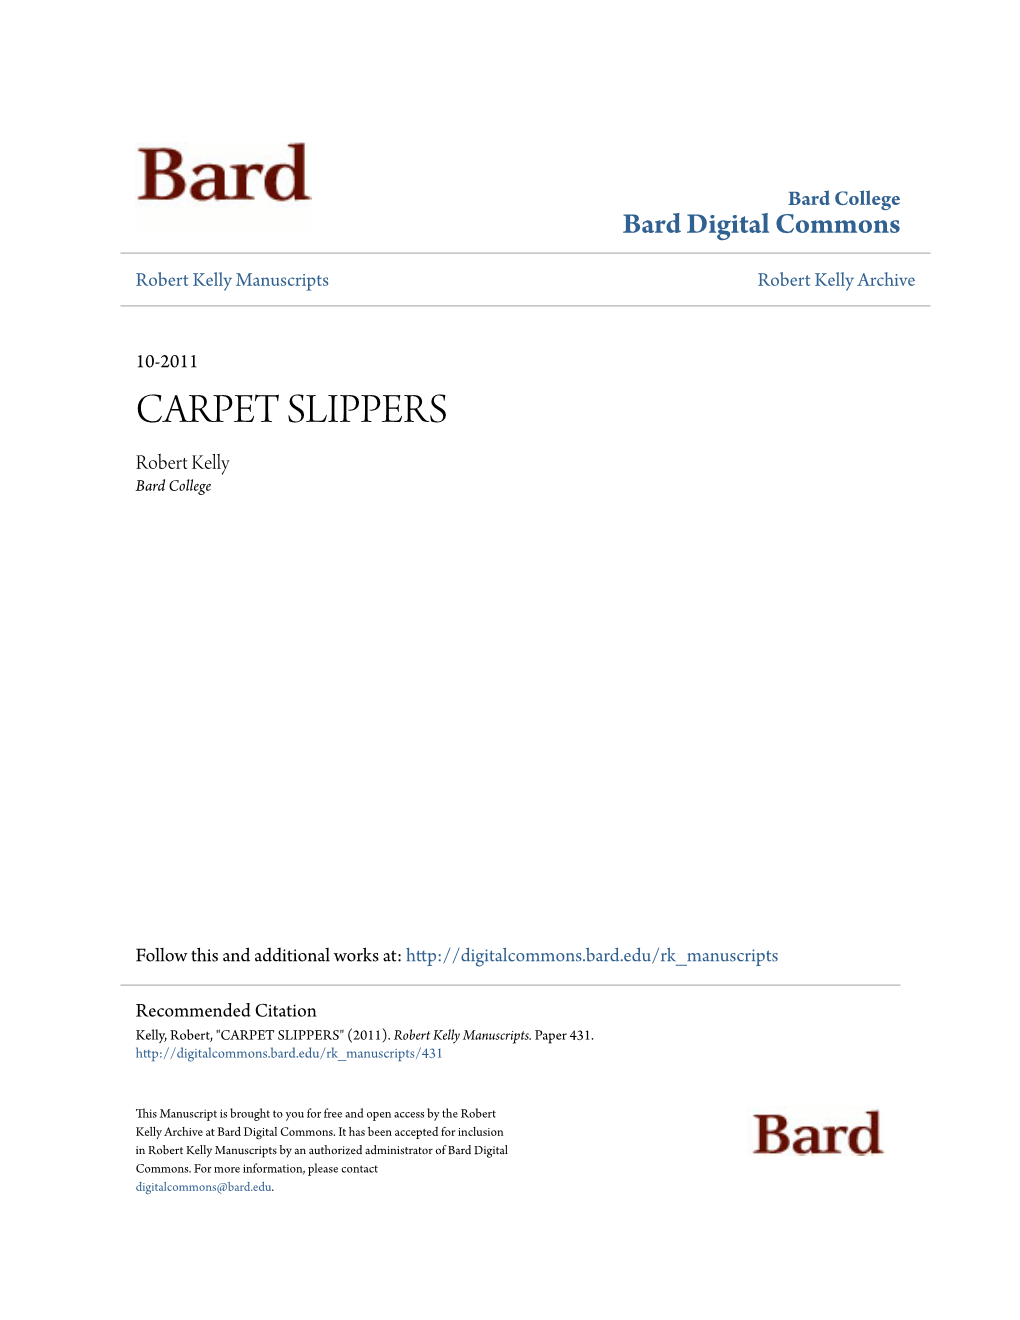 CARPET SLIPPERS Robert Kelly Bard College